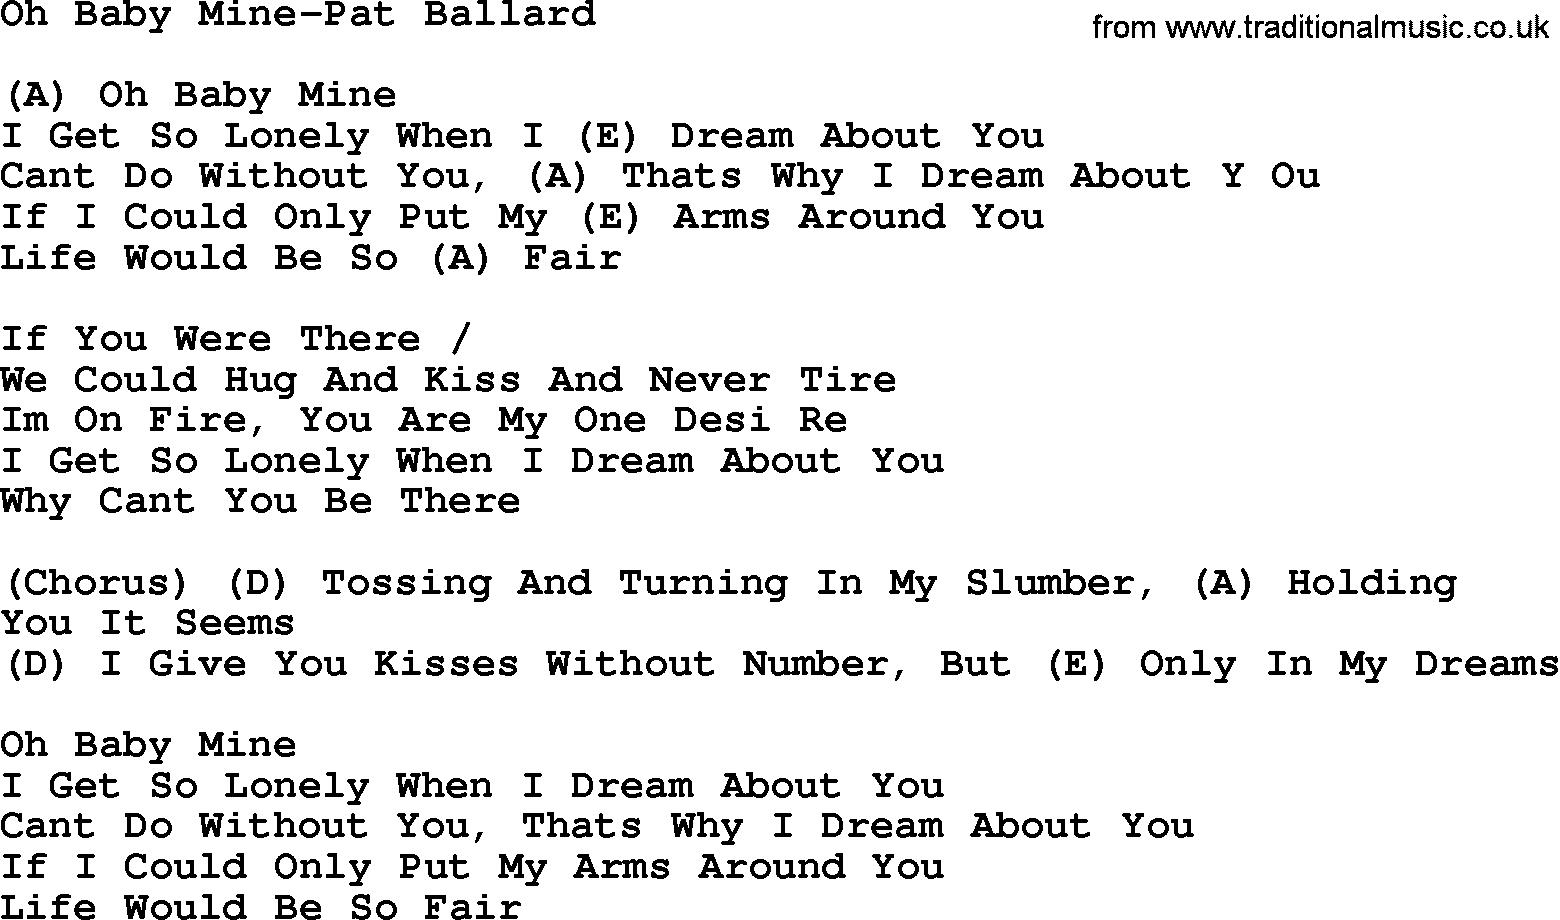 Country music song: Oh Baby Mine-Pat Ballard lyrics and chords